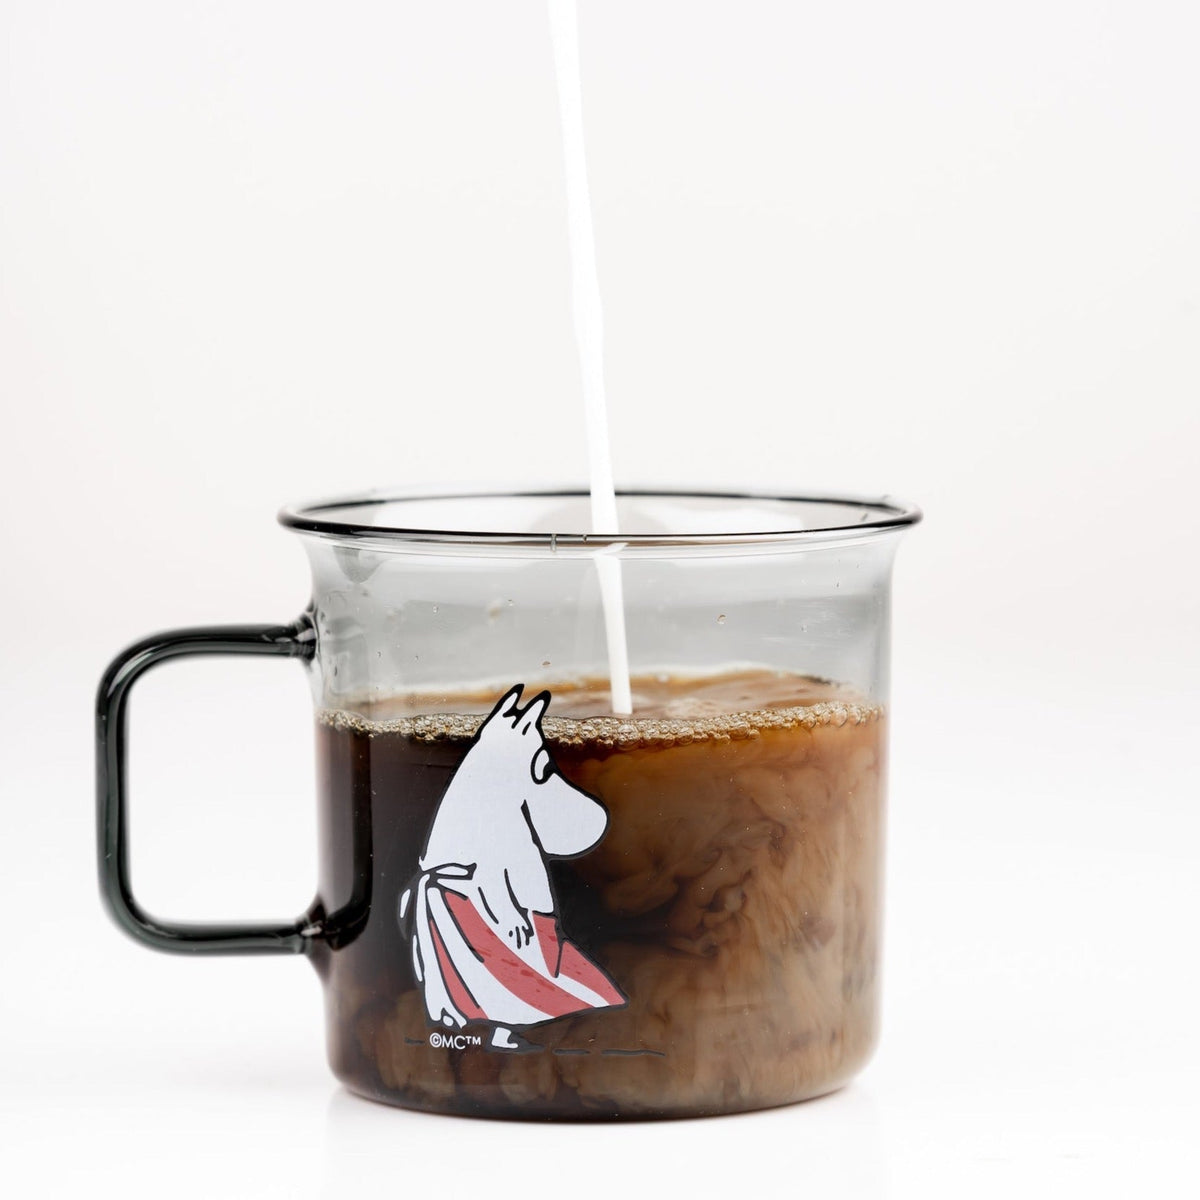 Moominmamma Glass Mug full of hot coffee